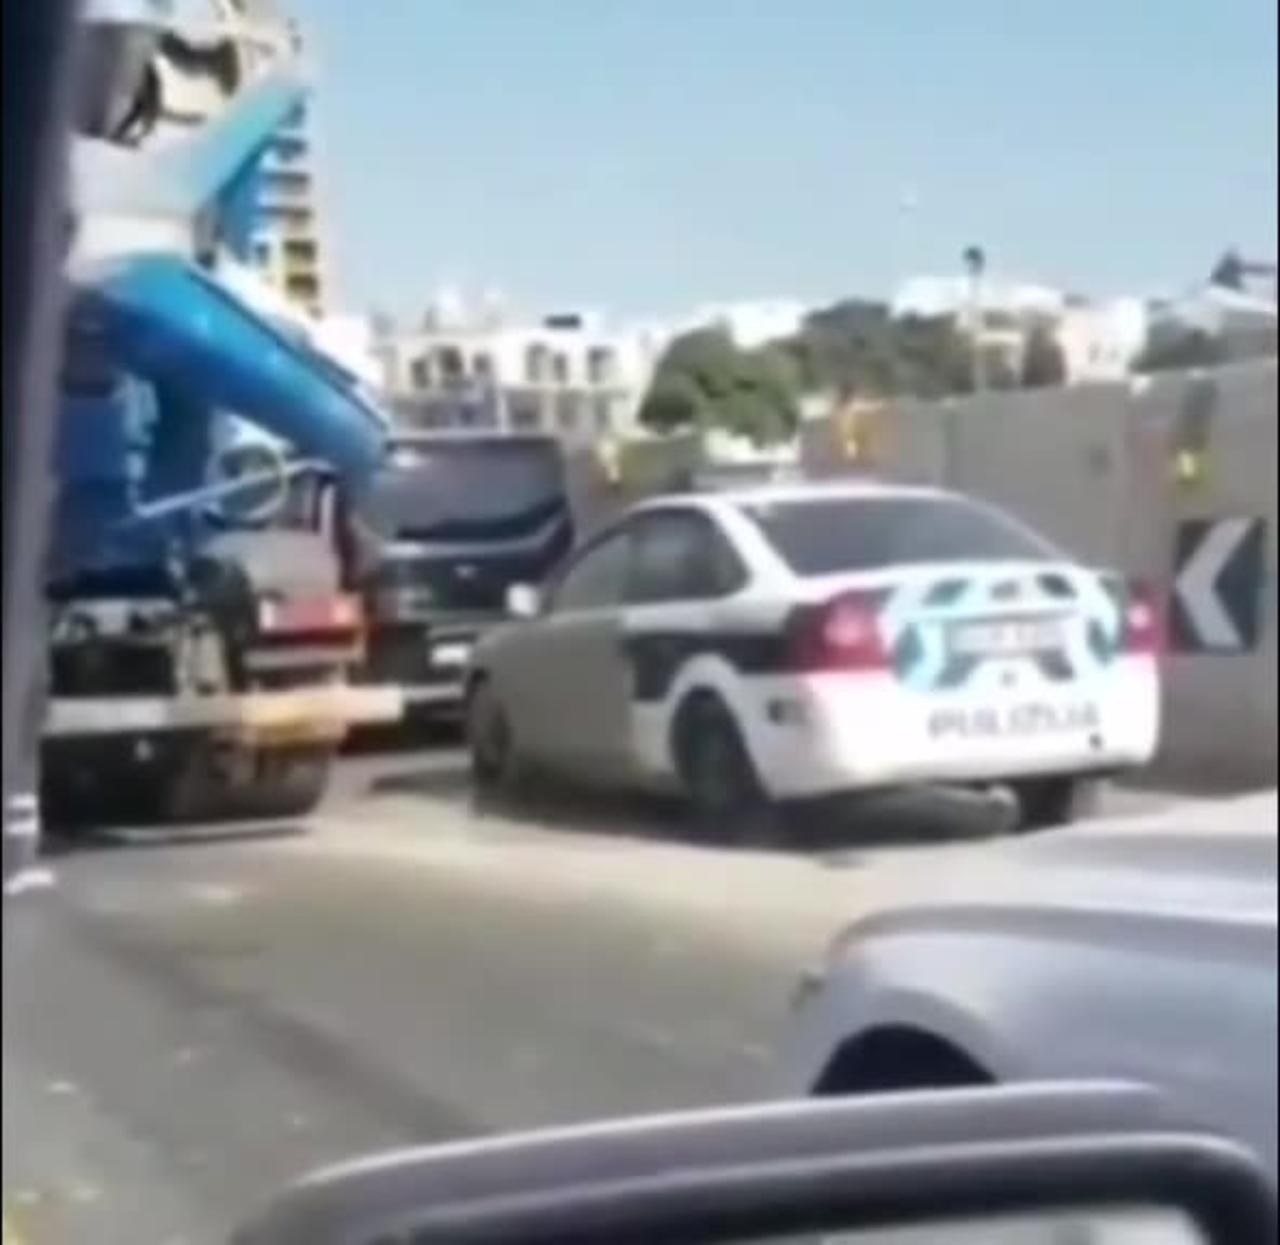 Concrete on a police car - Epic fail